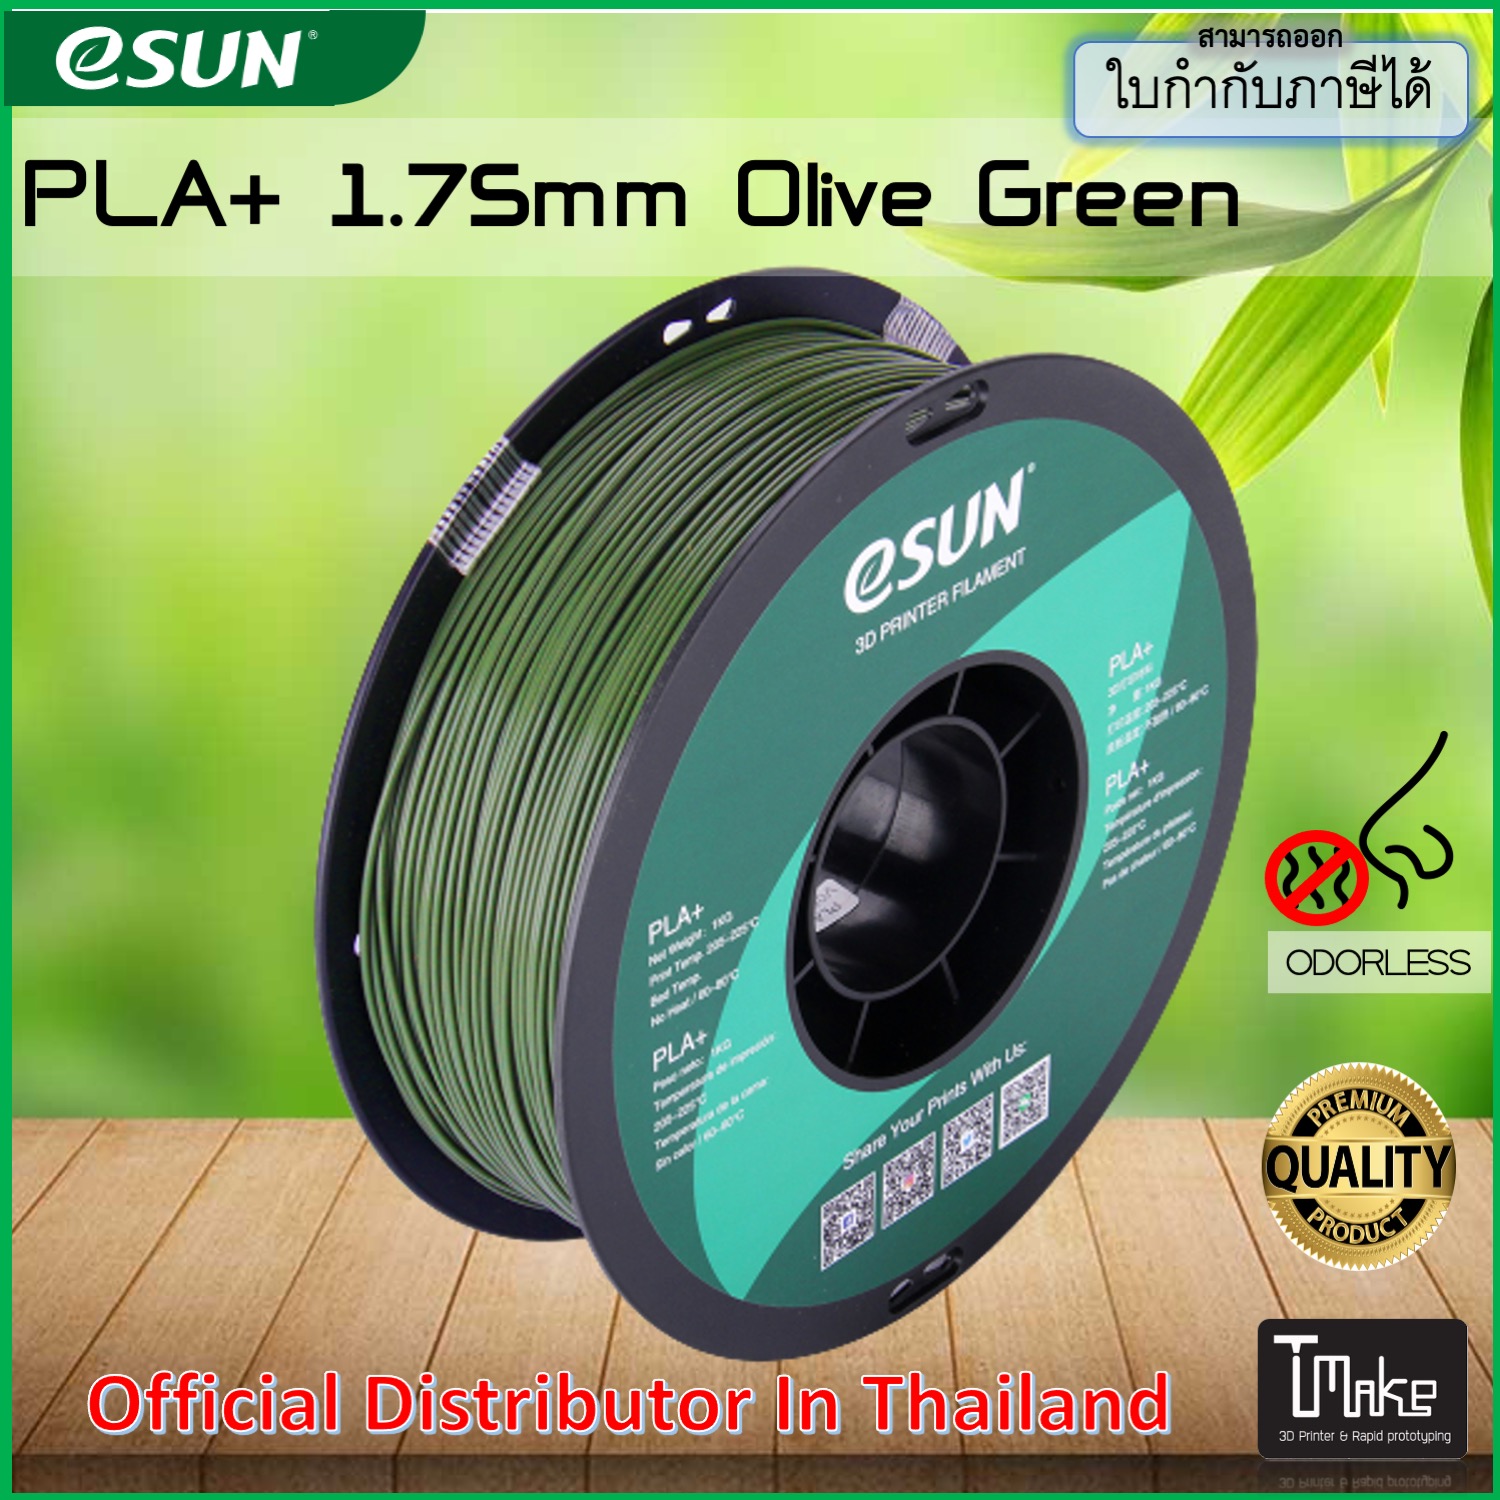 eSUN filament PLA+ Olive Green size 1.75mm for 3D Printer